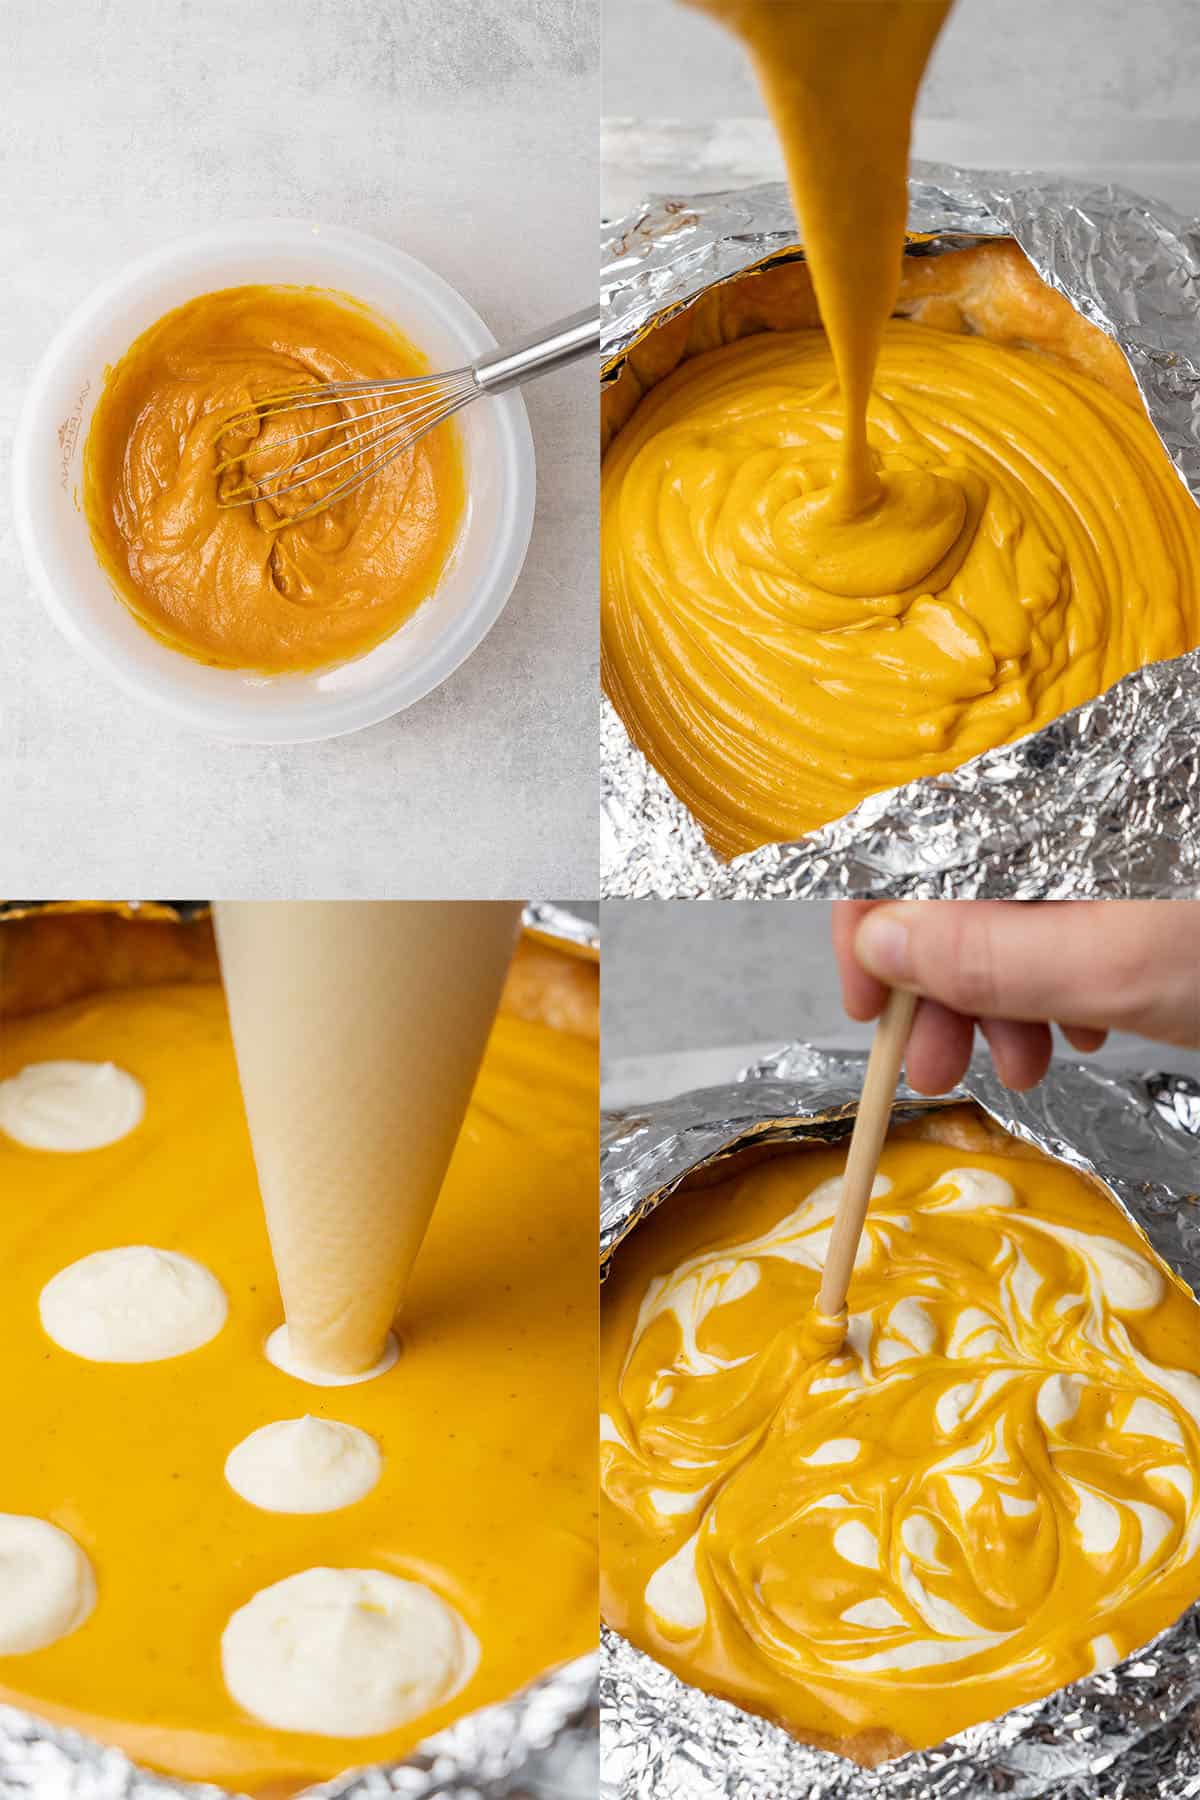 Pumpkin cream cheese pie assembly process.